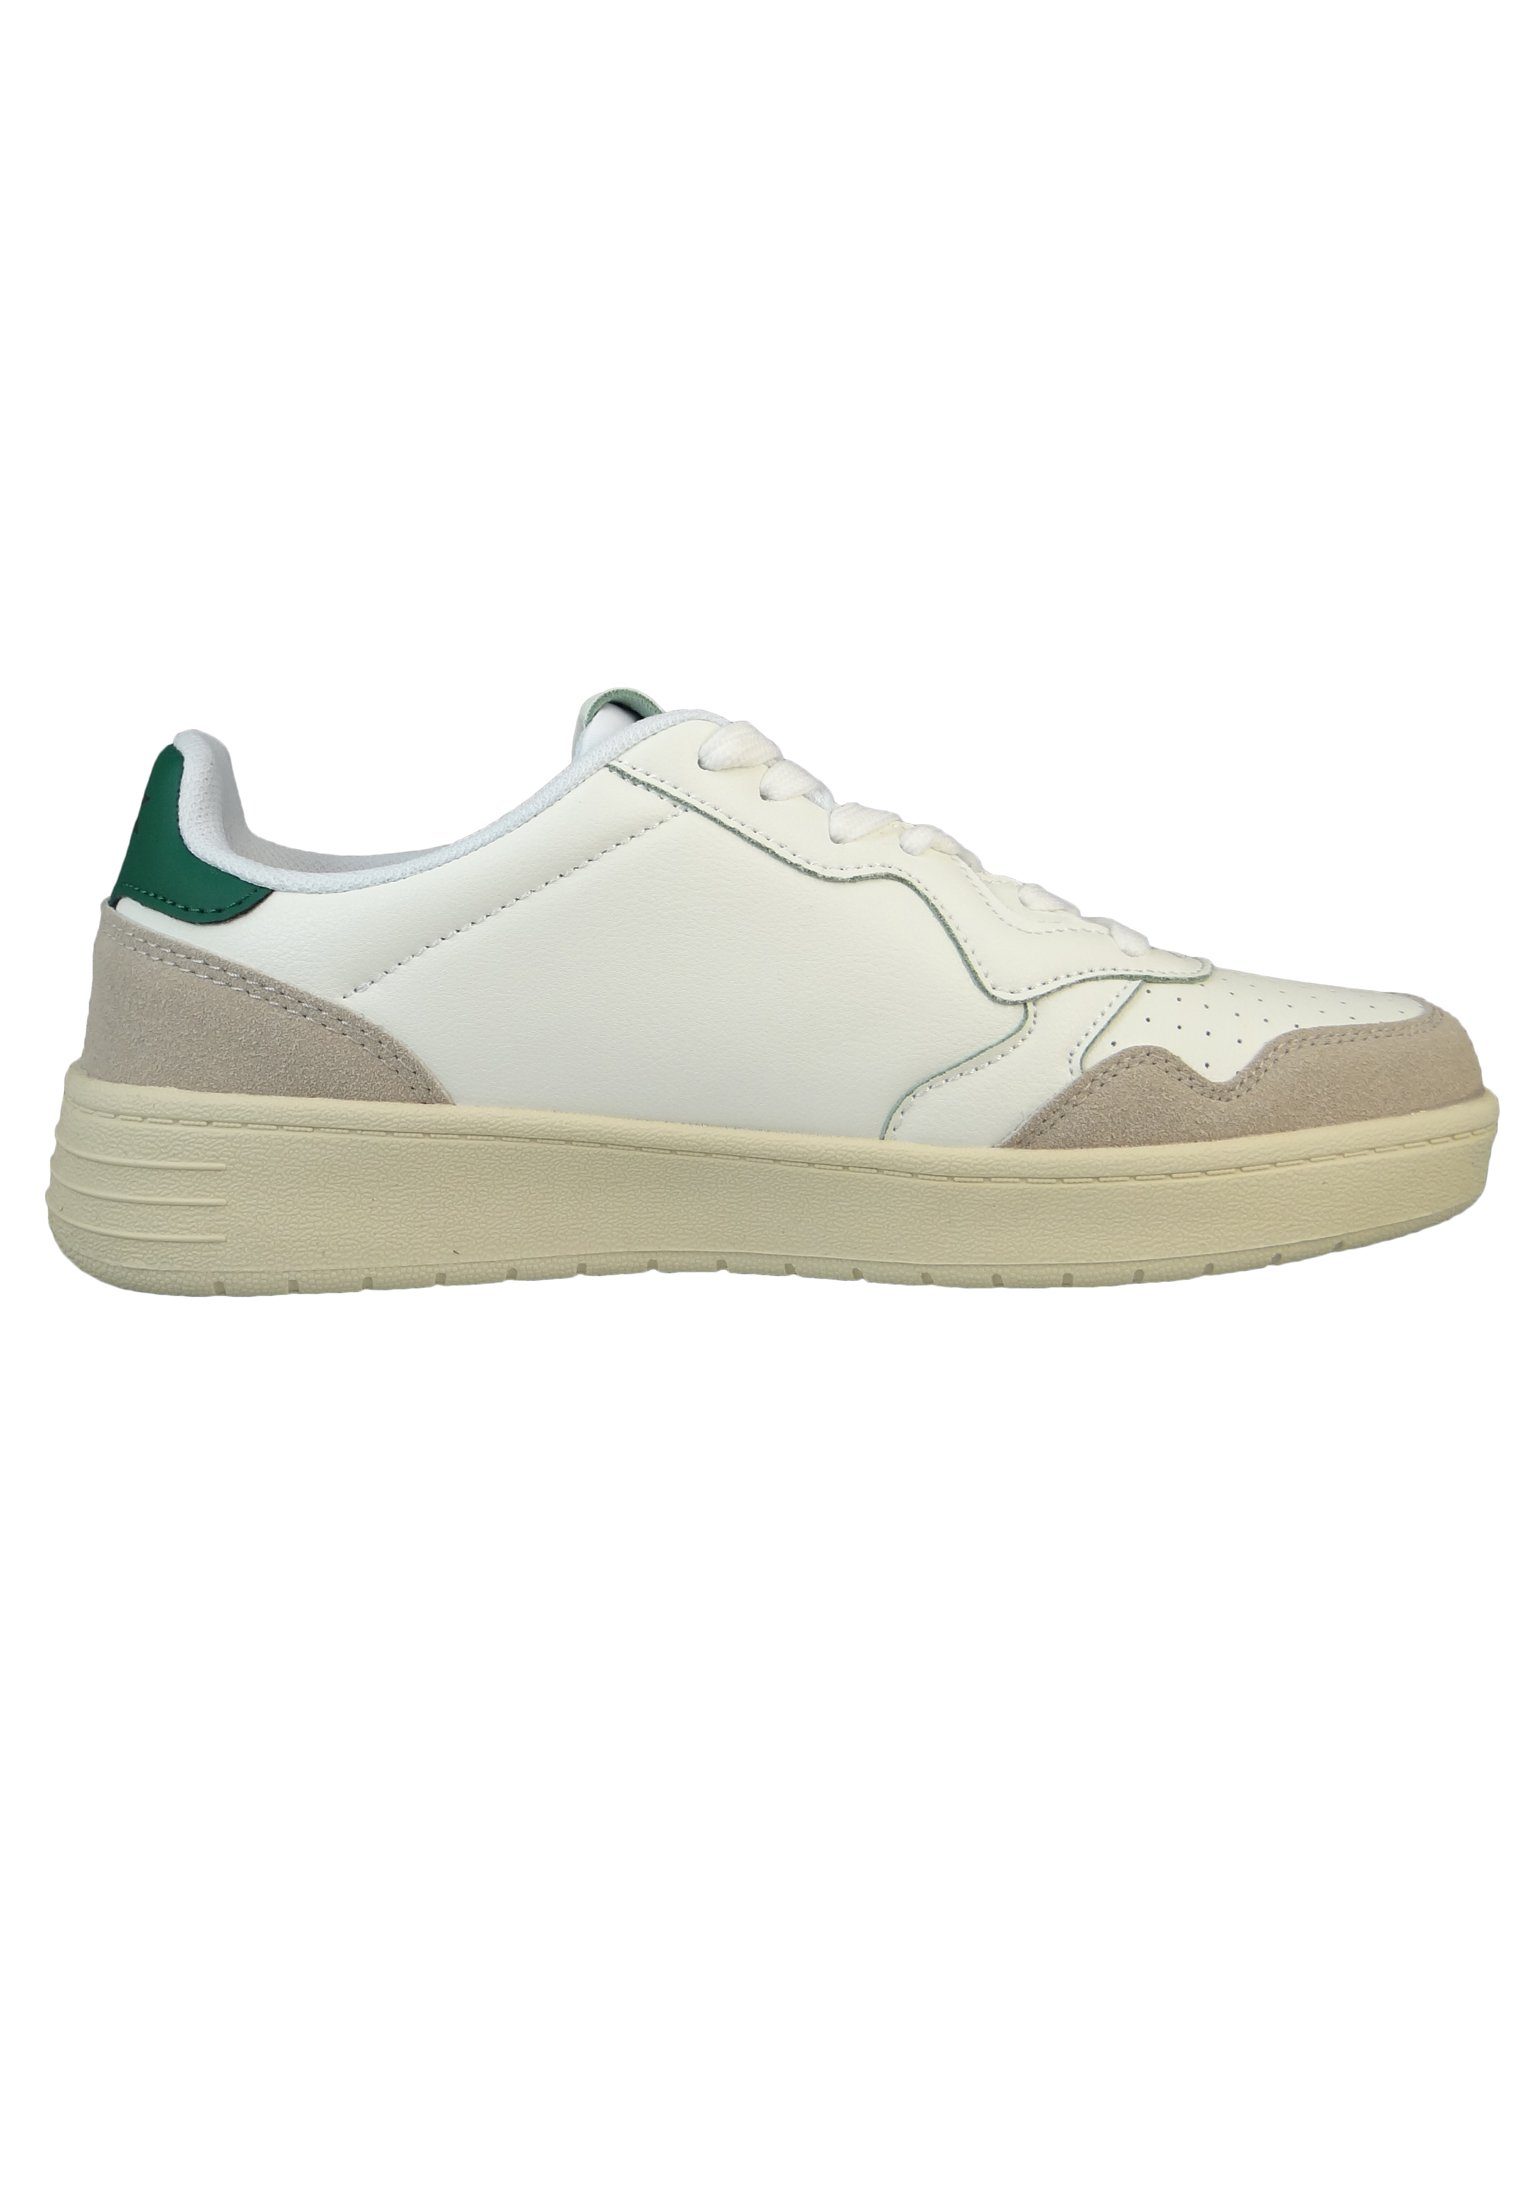 B51-3618 04 WHITE/ Sneaker (02001030) White/Green British GREEN Knights